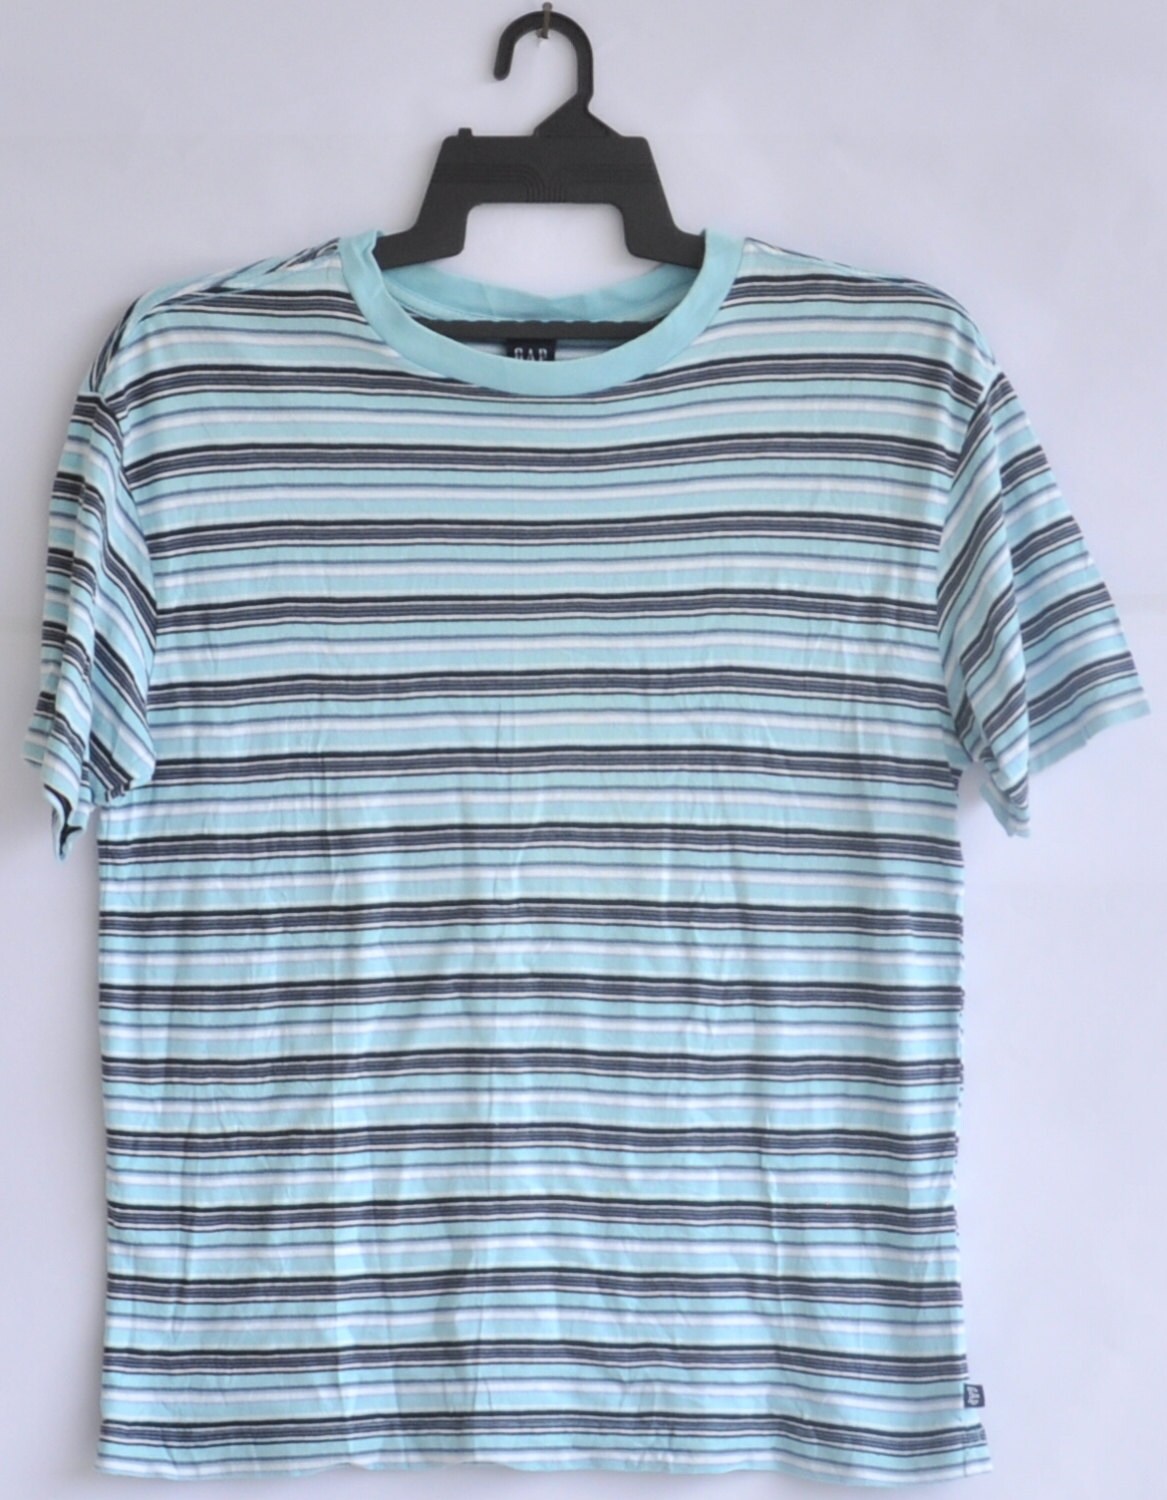 Vintage Gap Stripe Shirt Good Condition | Etsy